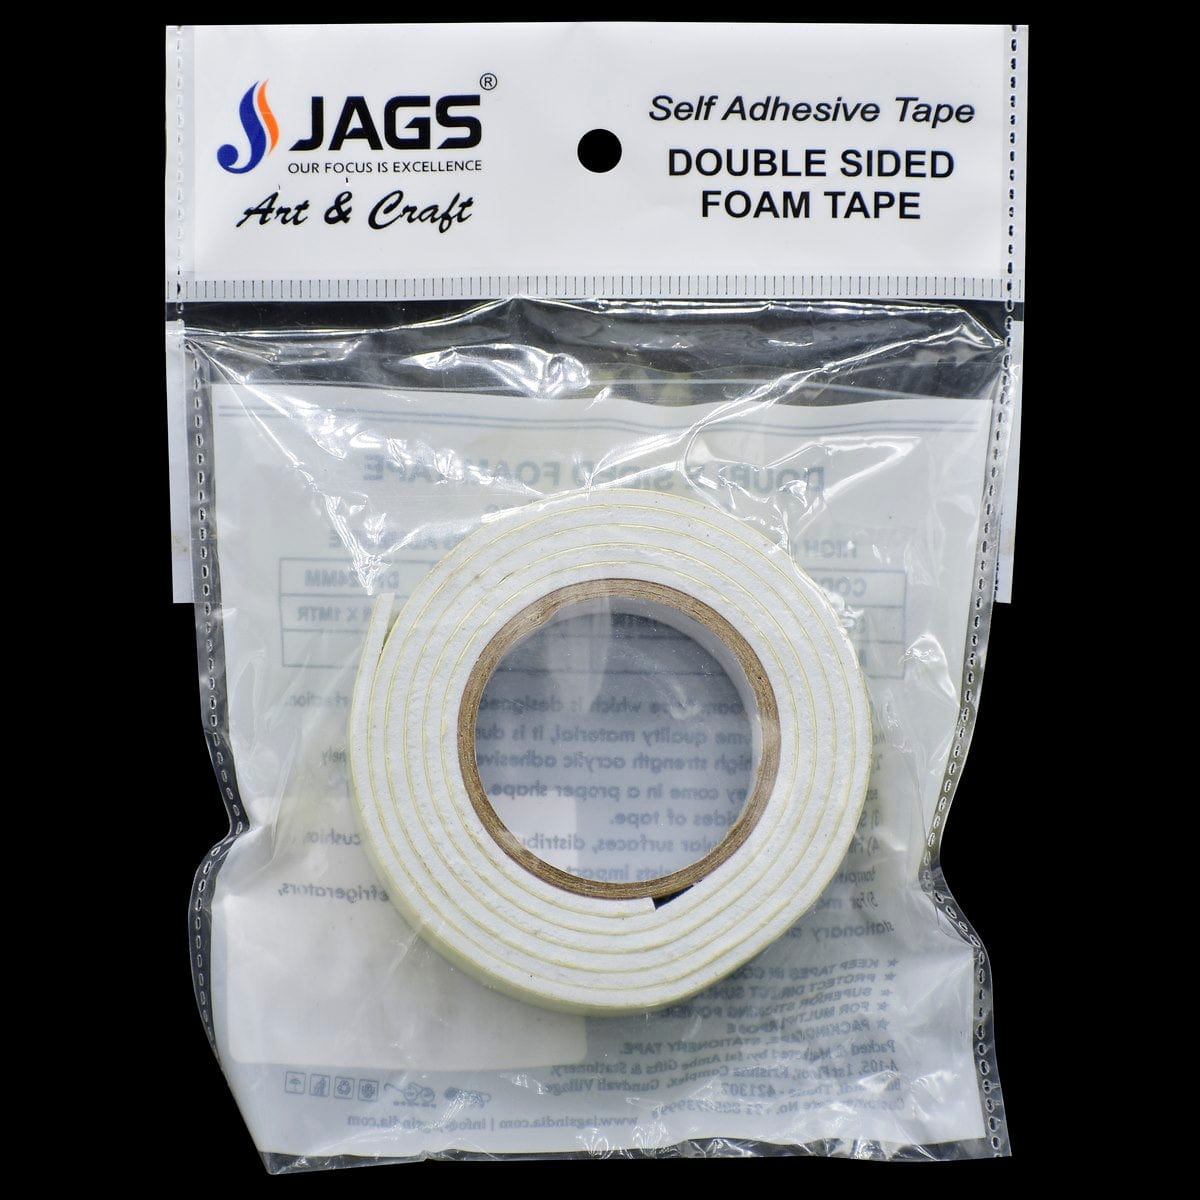 jags-mumbai Tape Double Sided Foam Tape 1 Meter long 24MM wide